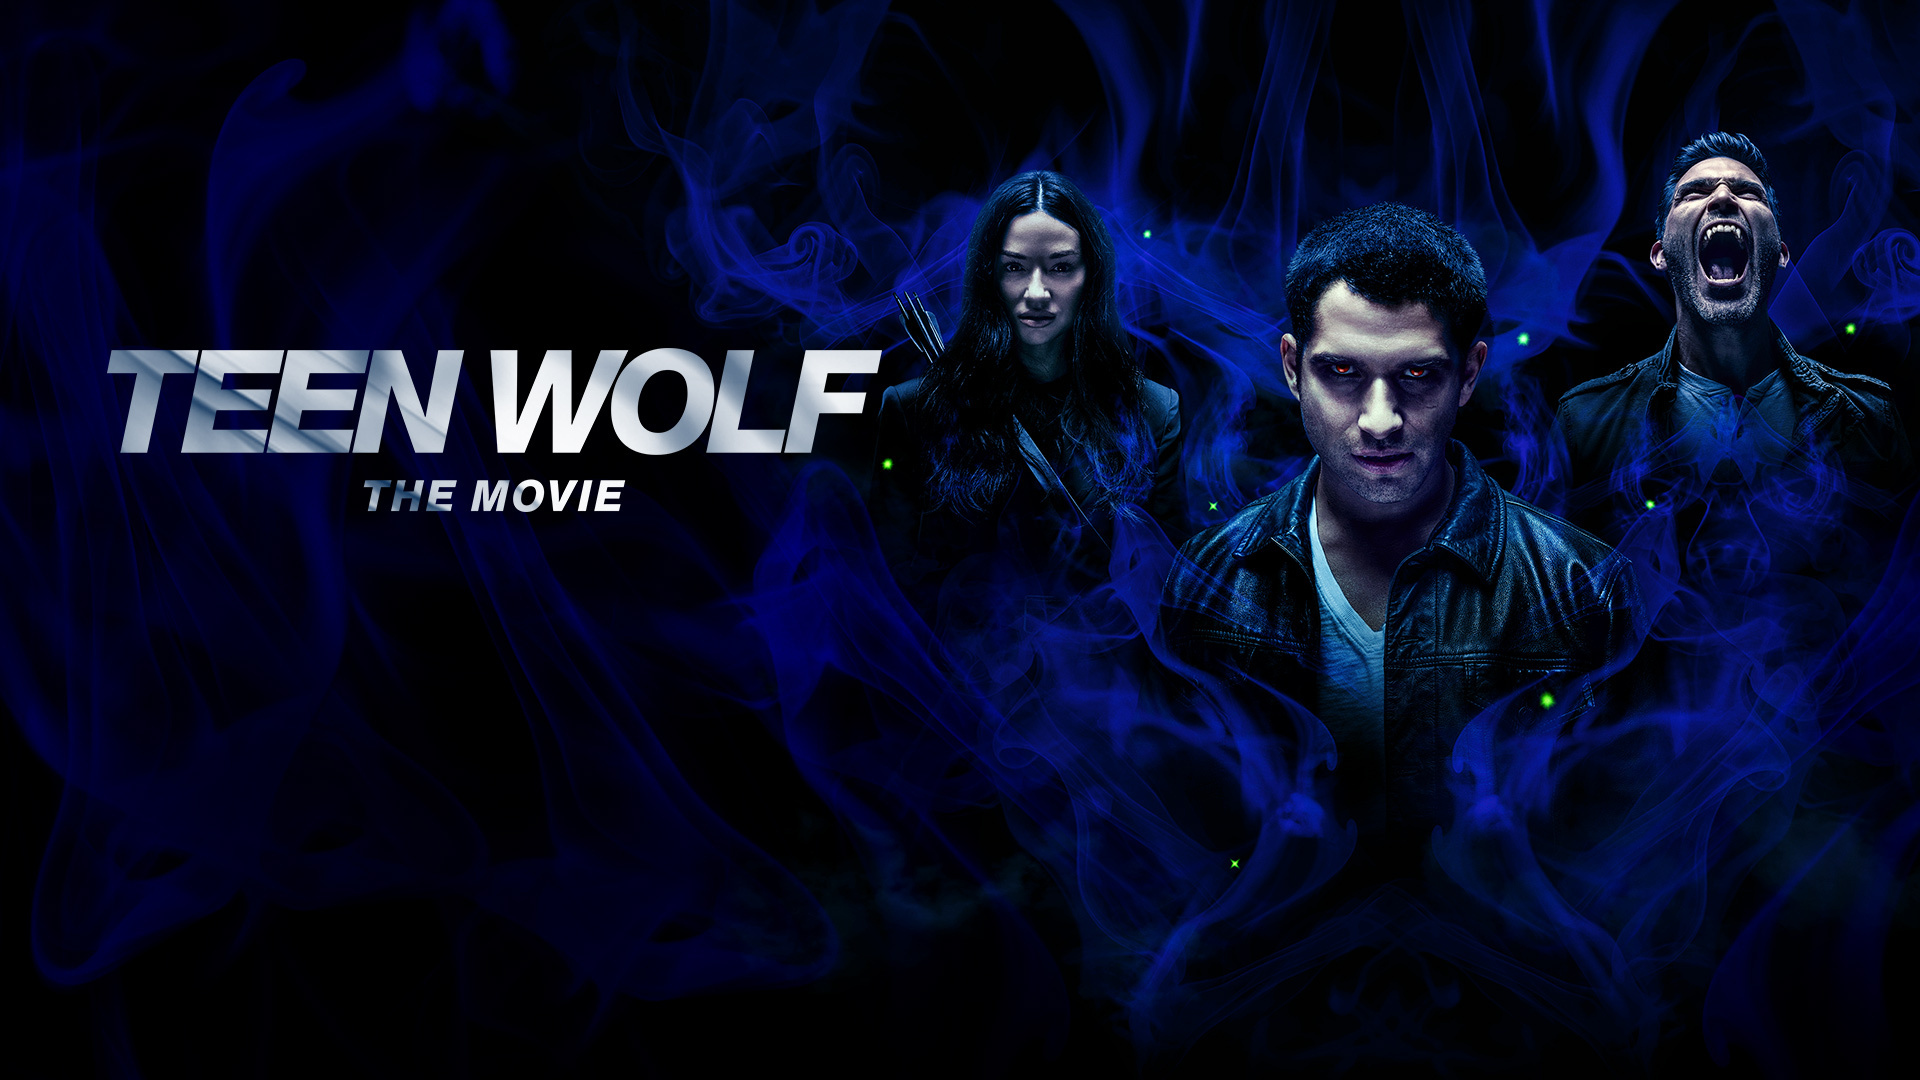 Teen Wolf: The Movie - Watch Full Movie on Paramount Plus